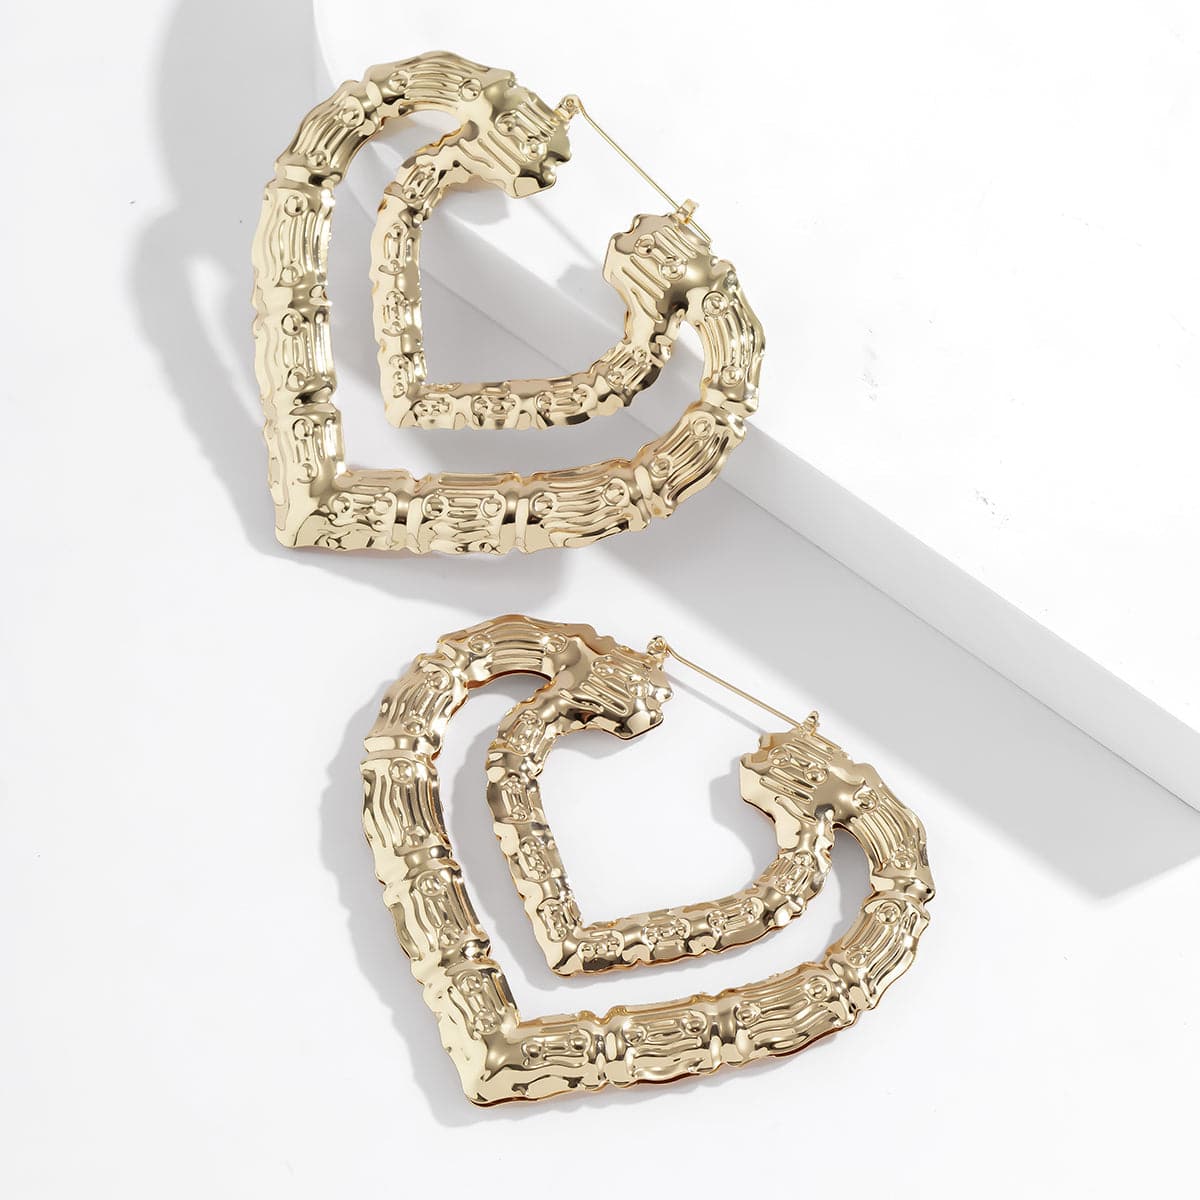 18K Gold-Plated Bamboo Layered Heart Hoop Earrings